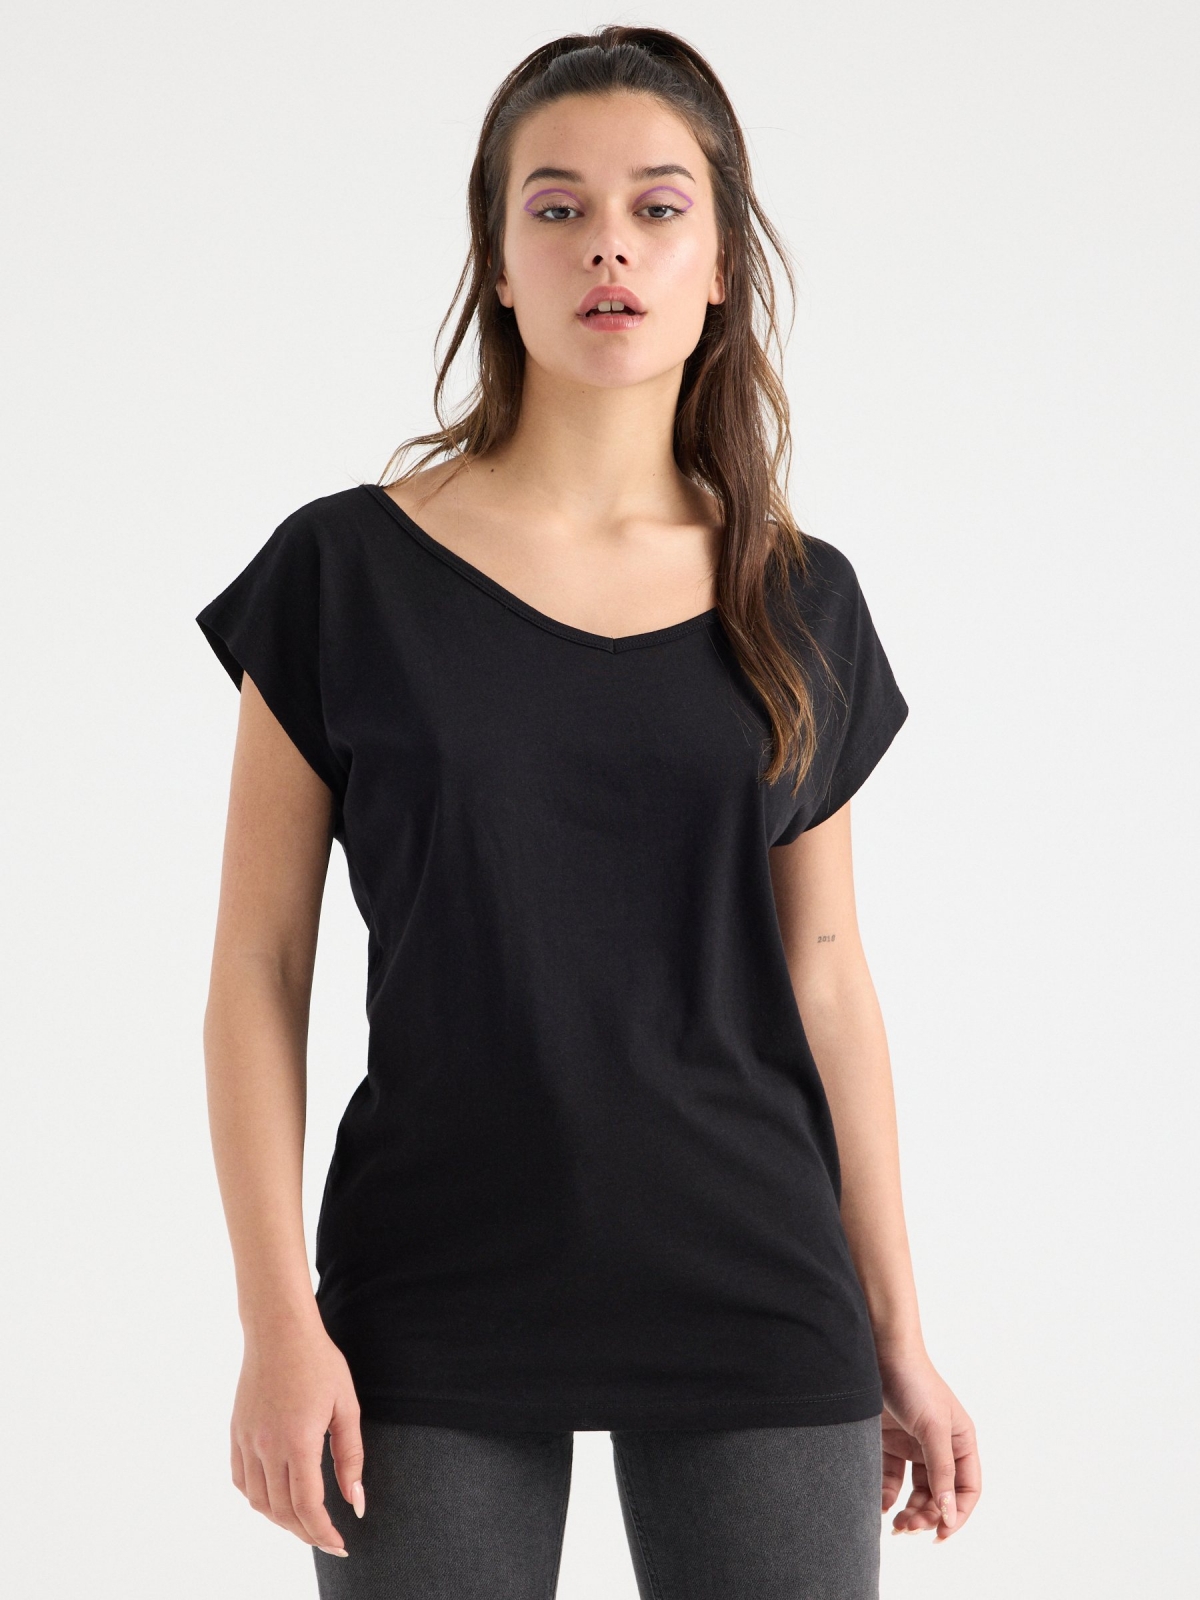 Camiseta escote espalda | Camisetas Mujer INSIDE